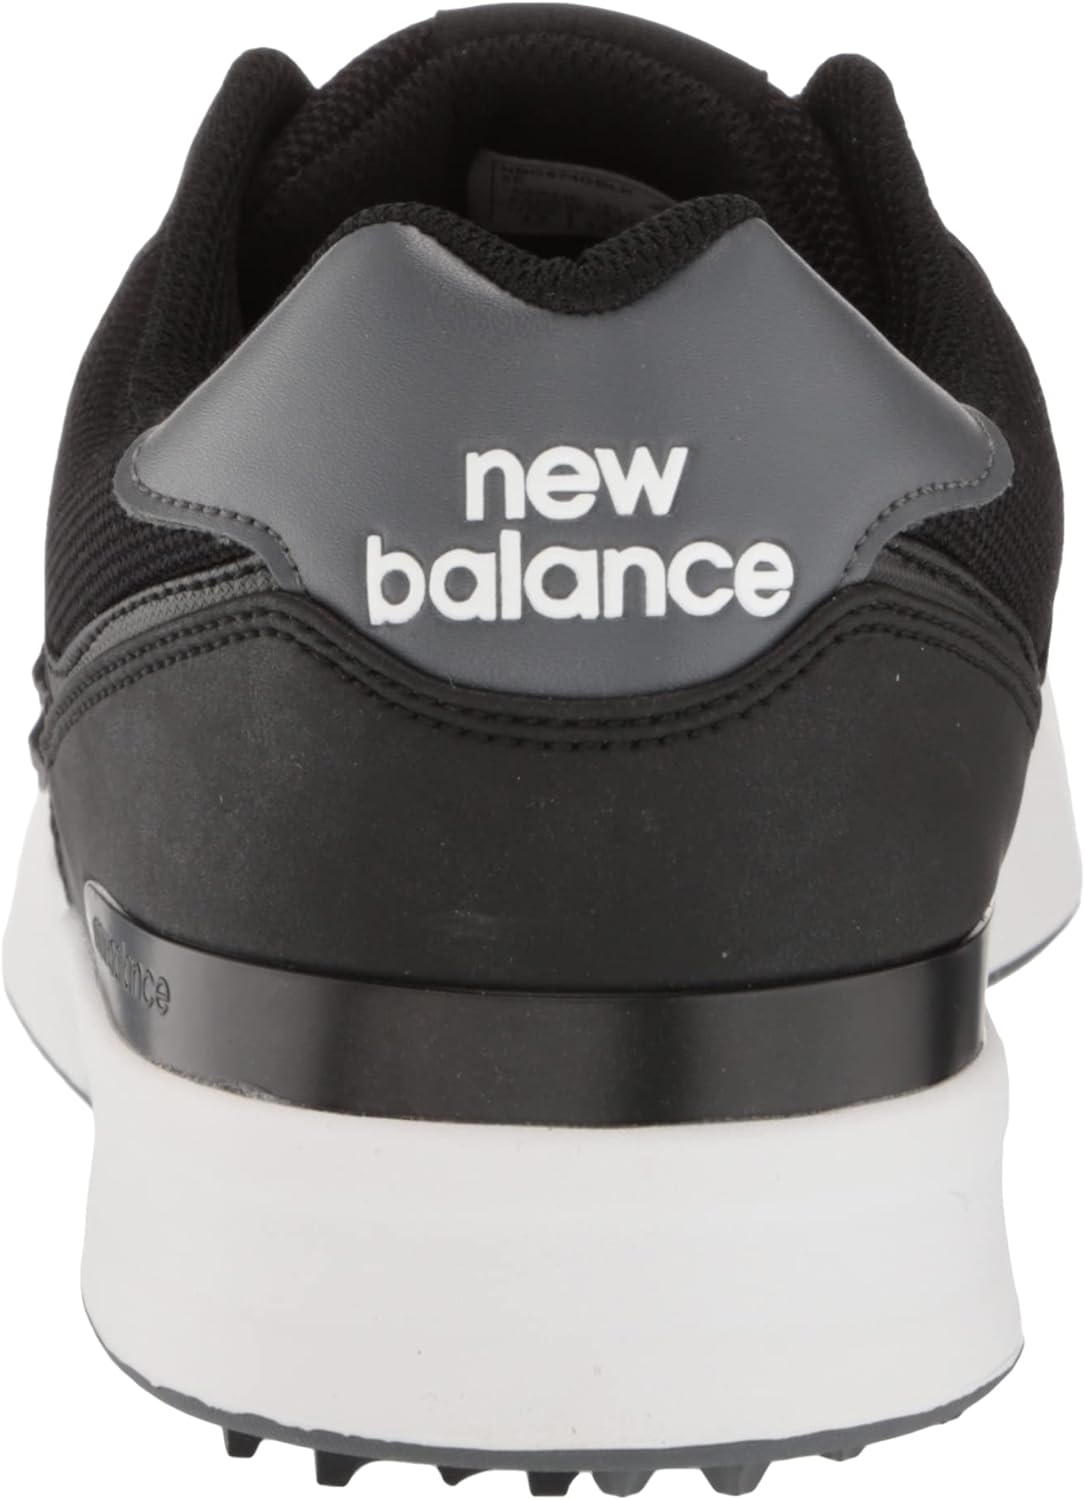 New Balance Men's 574 Greens Golf Shoes Black D 11 - image 3 of 8